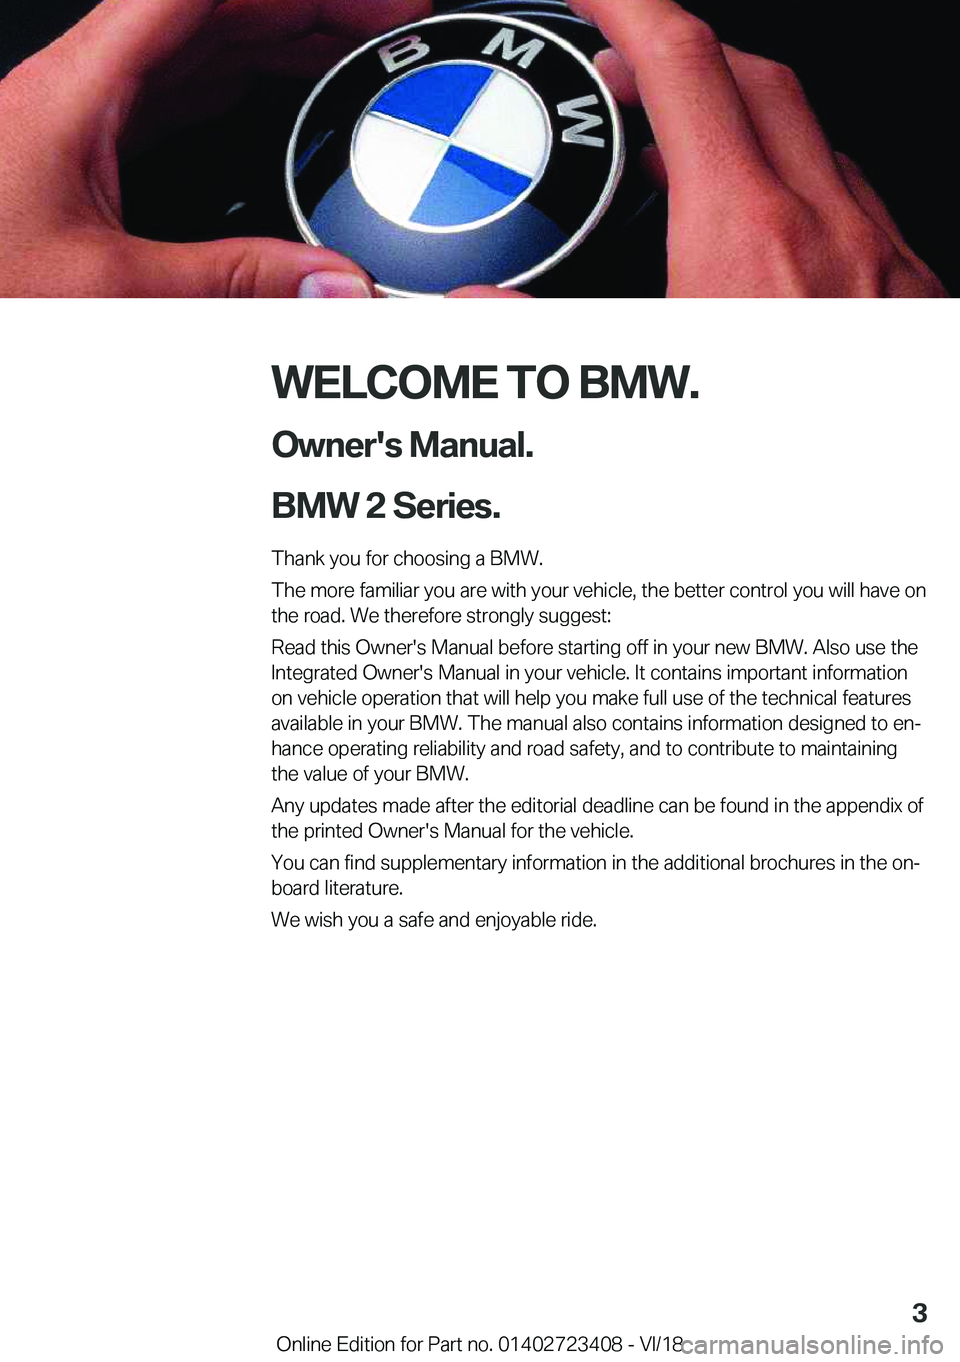 BMW 2 SERIES COUPE 2019  Owners Manual �W�E�L�C�O�M�E��T�O��B�M�W�.�O�w�n�e�r�'�s��M�a�n�u�a�l�.
�B�M�W��2��S�e�r�i�e�s�.�
�T�h�a�n�k��y�o�u��f�o�r��c�h�o�o�s�i�n�g��a��B�M�W�.
�T�h�e��m�o�r�e��f�a�m�i�l�i�a�r��y�o�u��a�